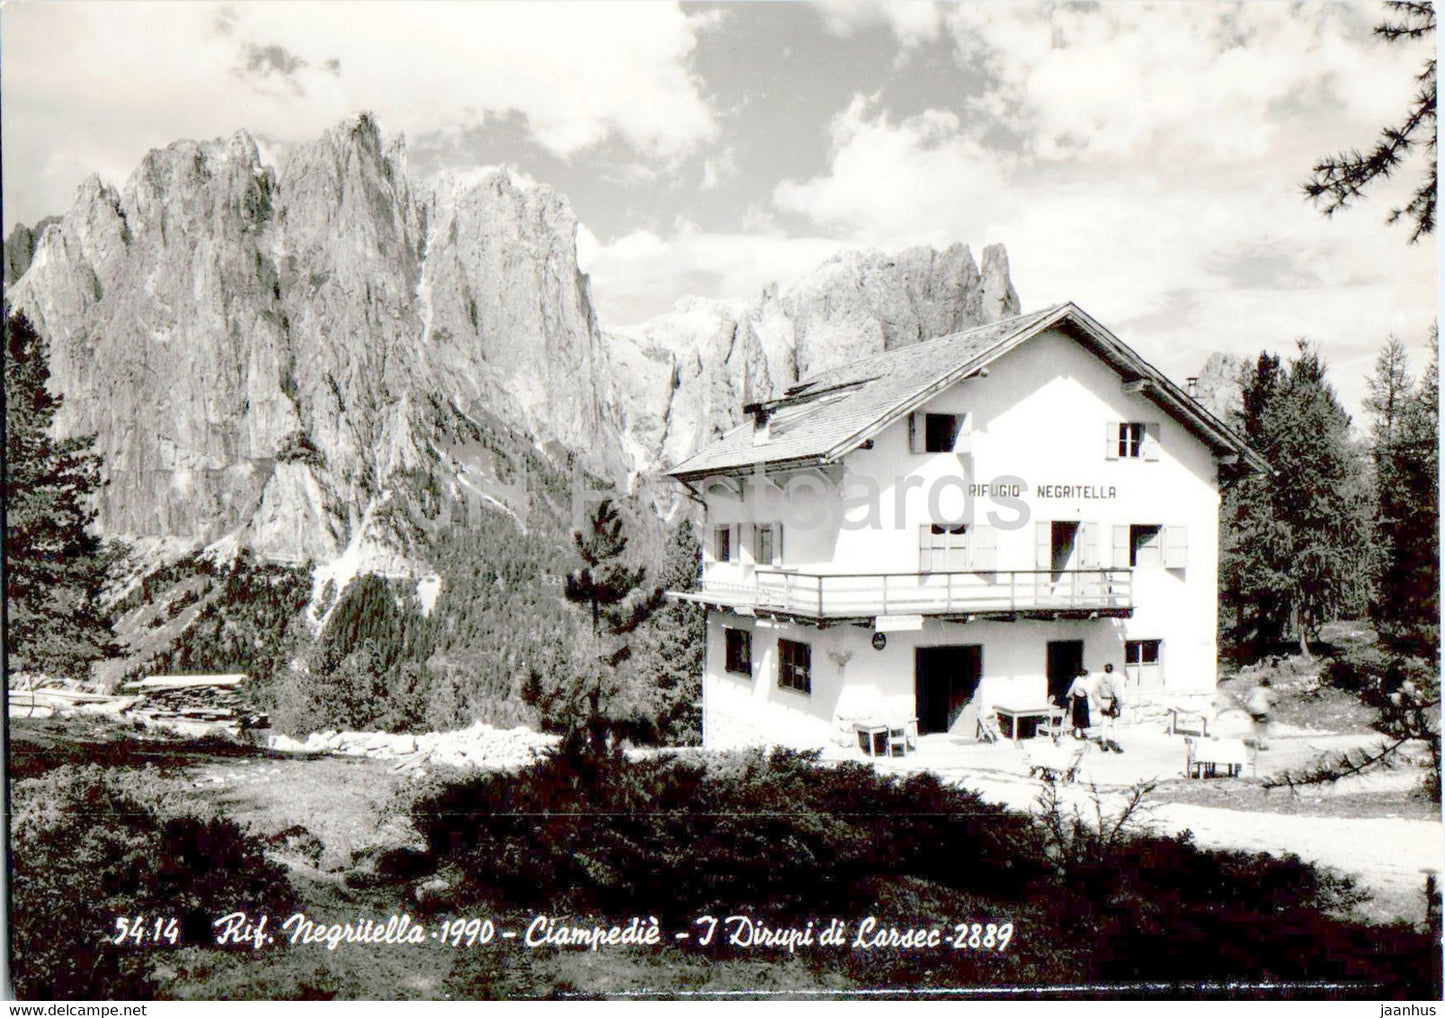 Rif Negritella - Ciampedie - Dirupi di Larsec 2889 - old postcard - Italy - unused - JH Postcards